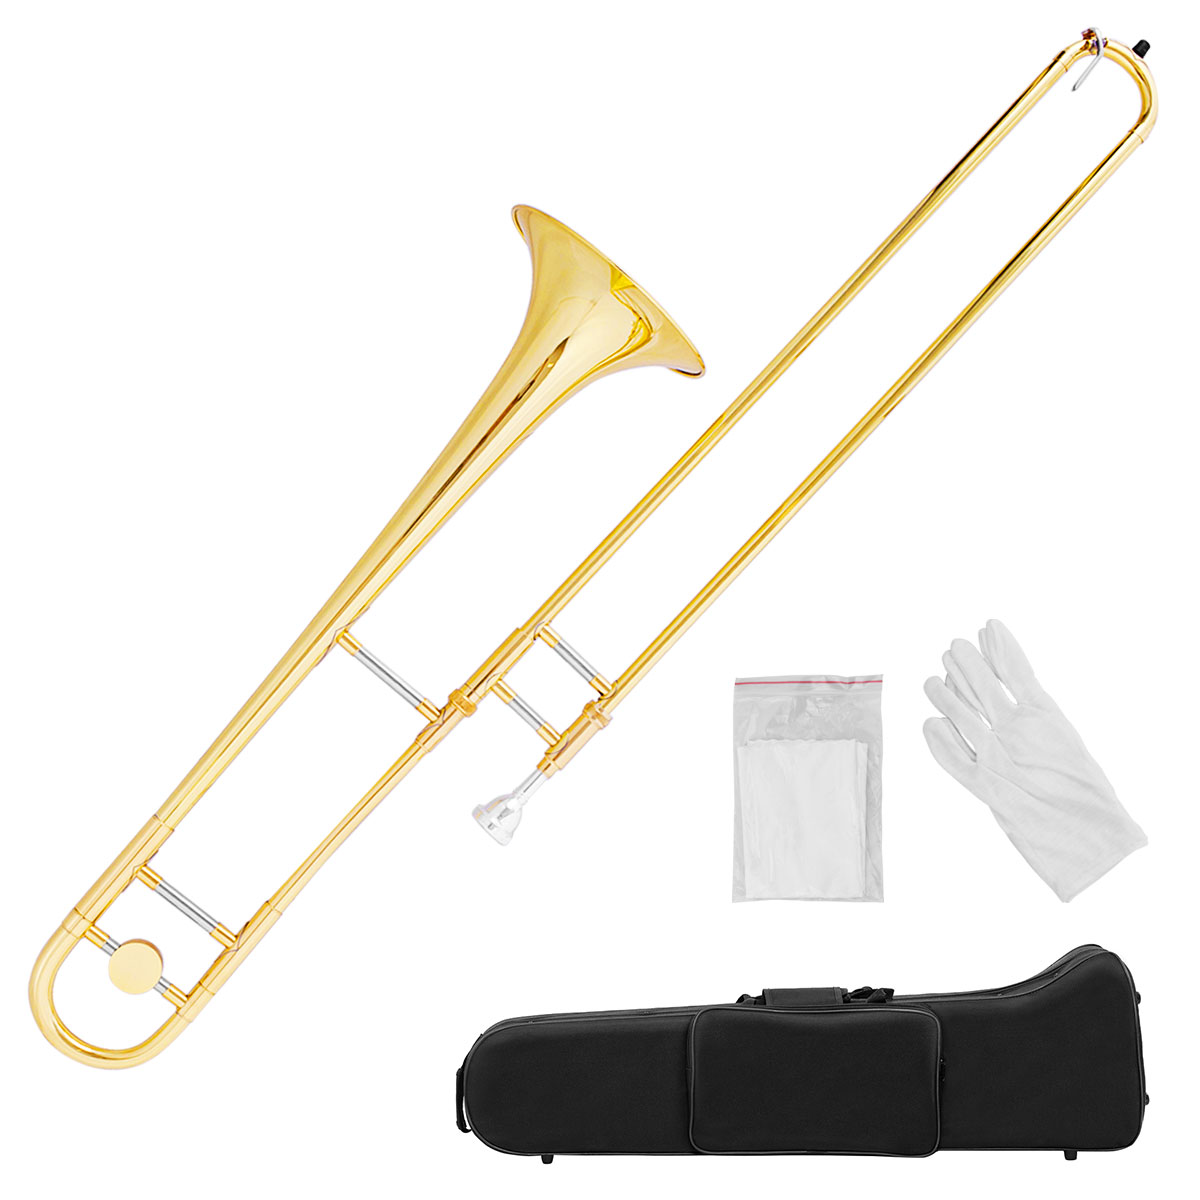 B Flat Tenor Slide Trombone Brass with Gloves